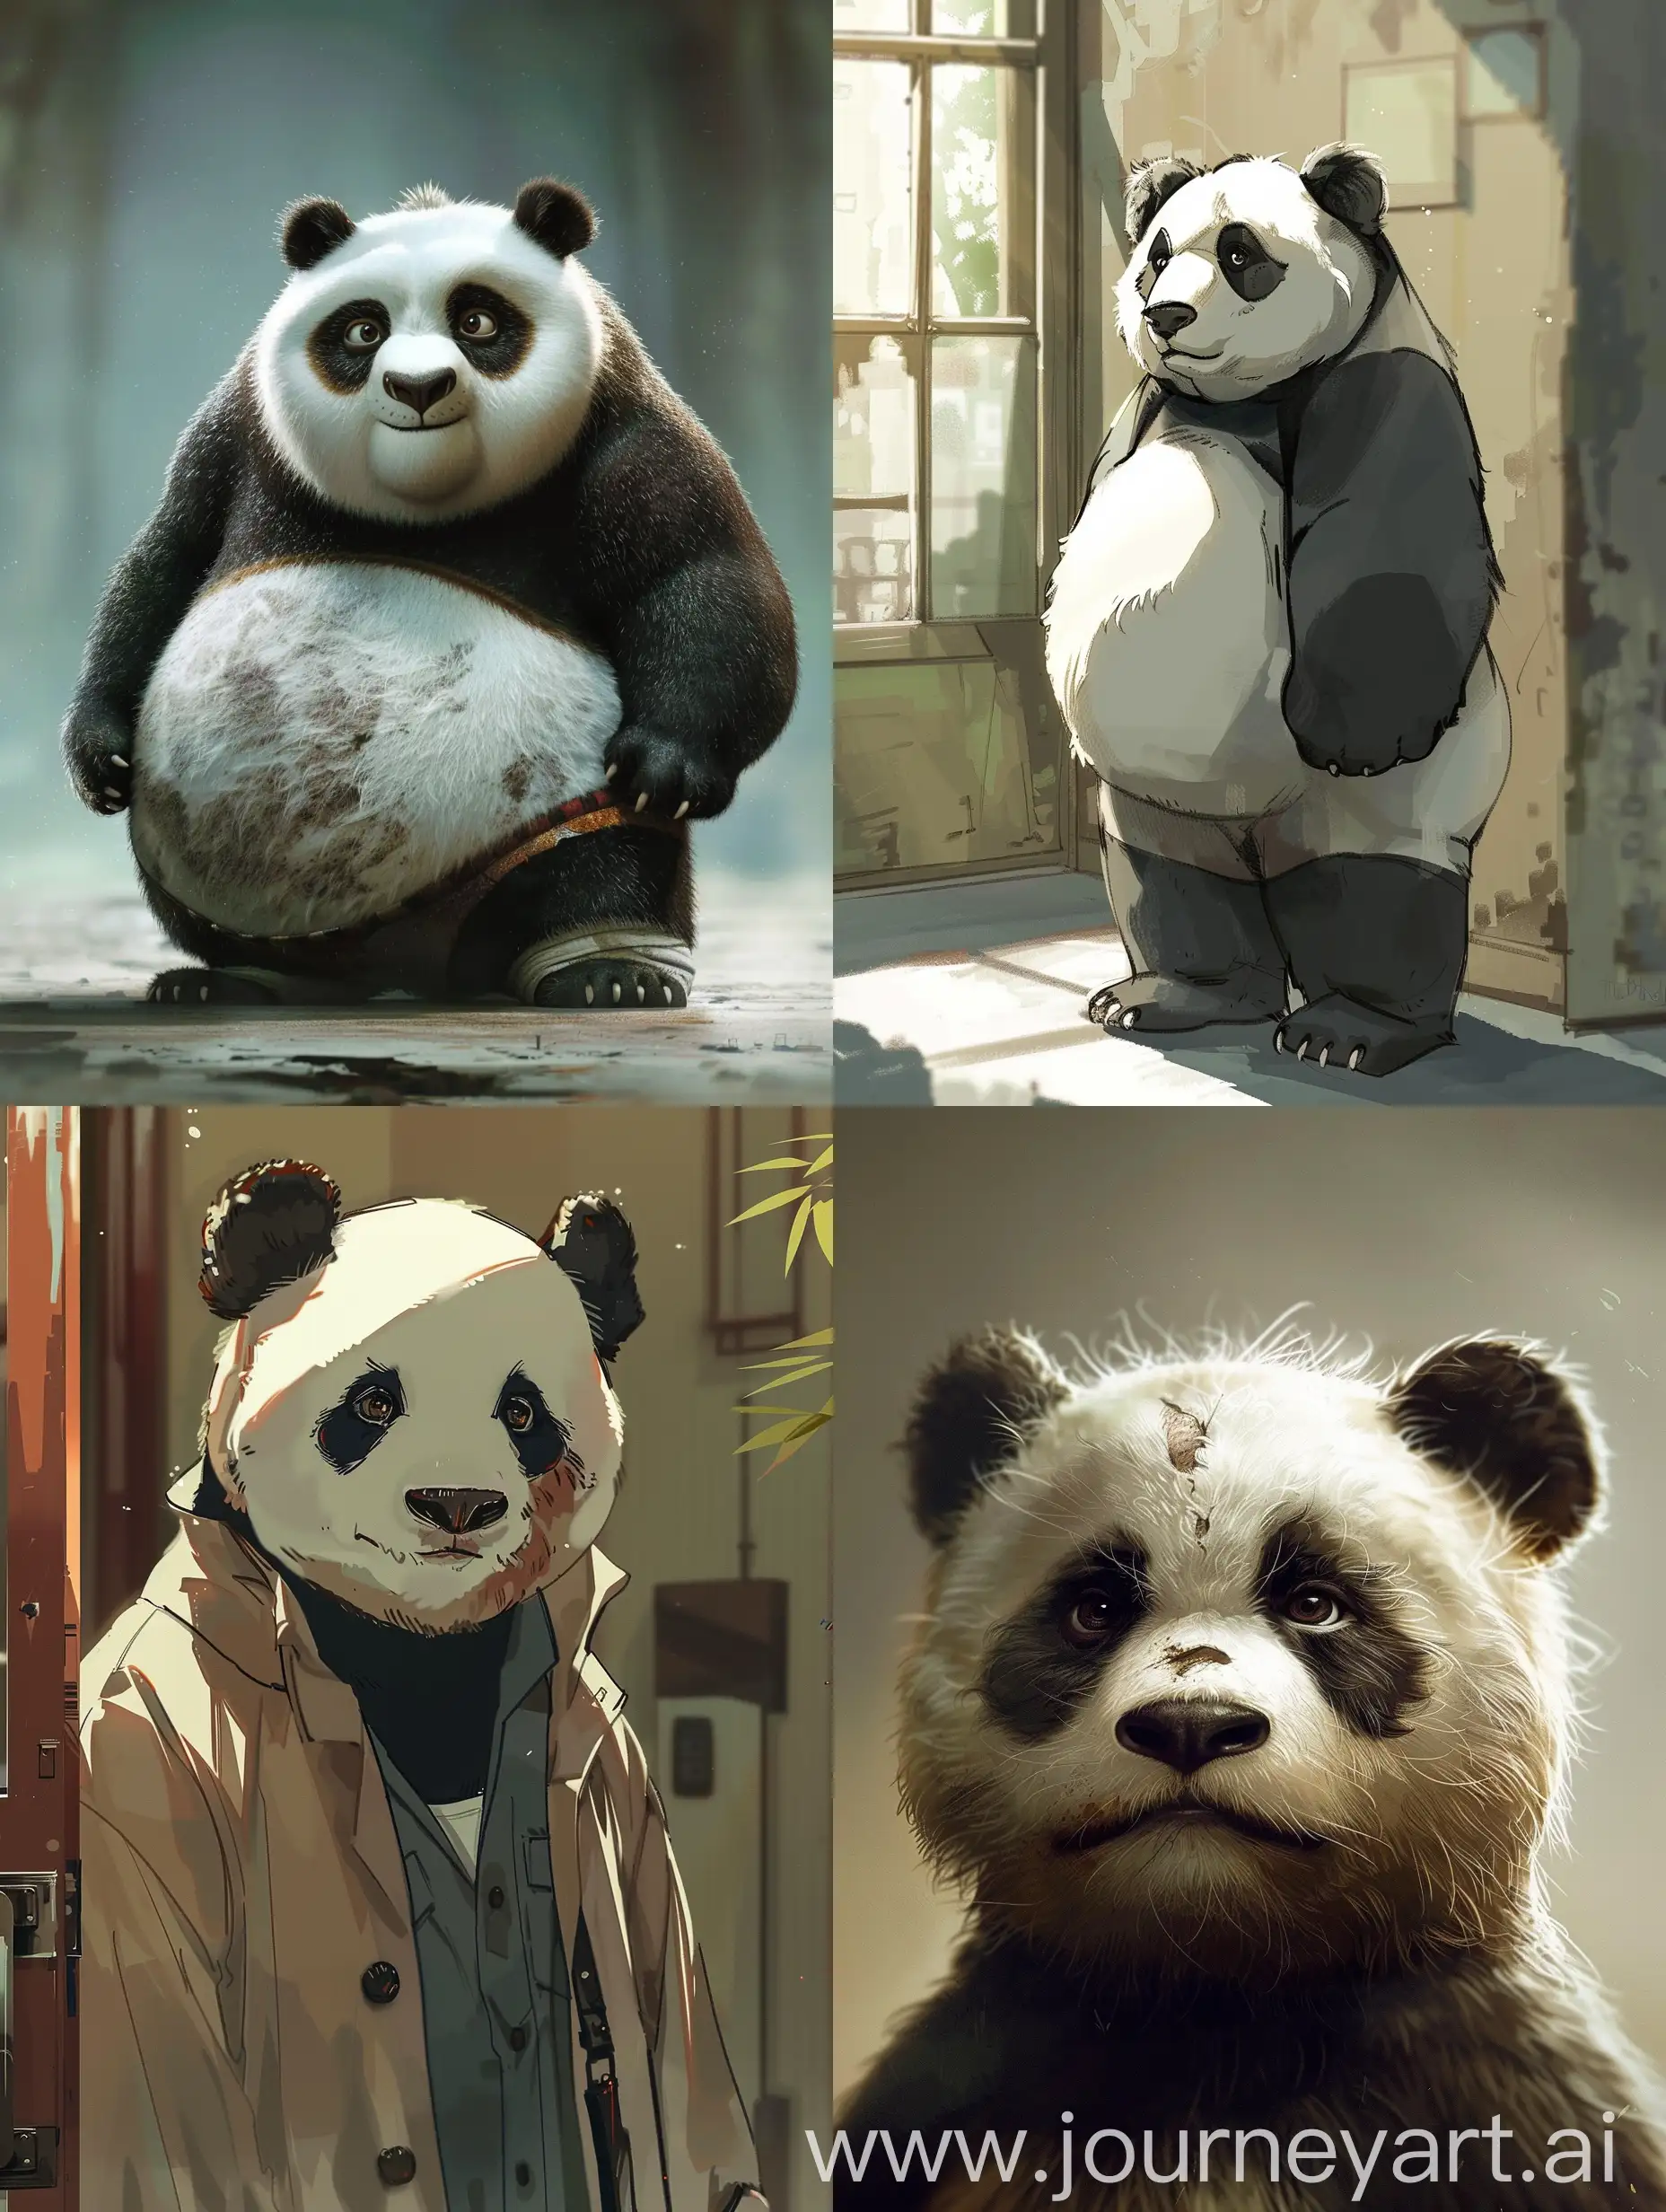 Chubby-Panda-Transformation-into-Human-Guy-with-Dark-Circles-Under-Eyes